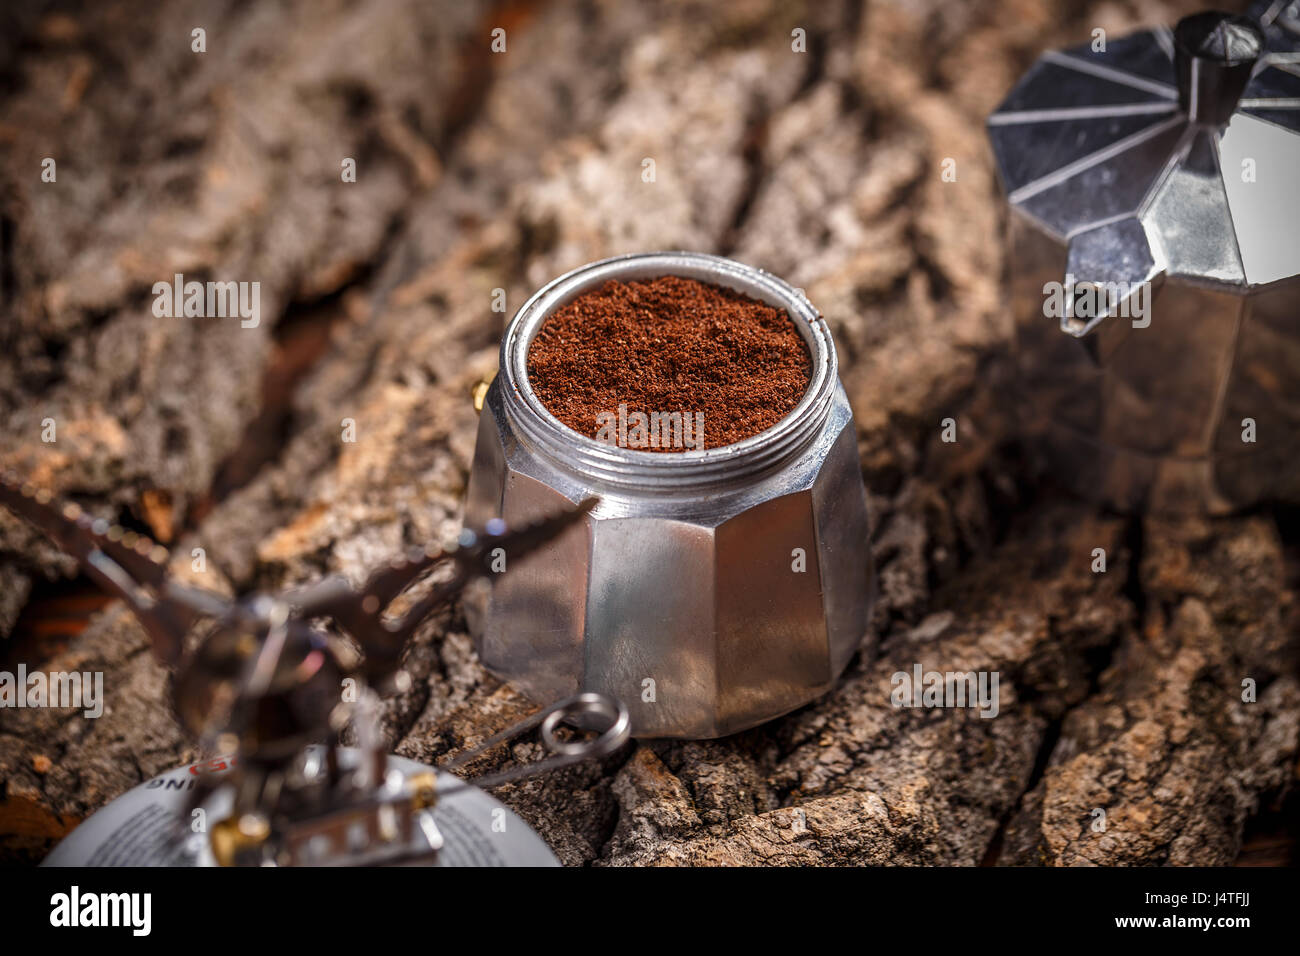 Italian coffee maker with ground coffee Stock Photo